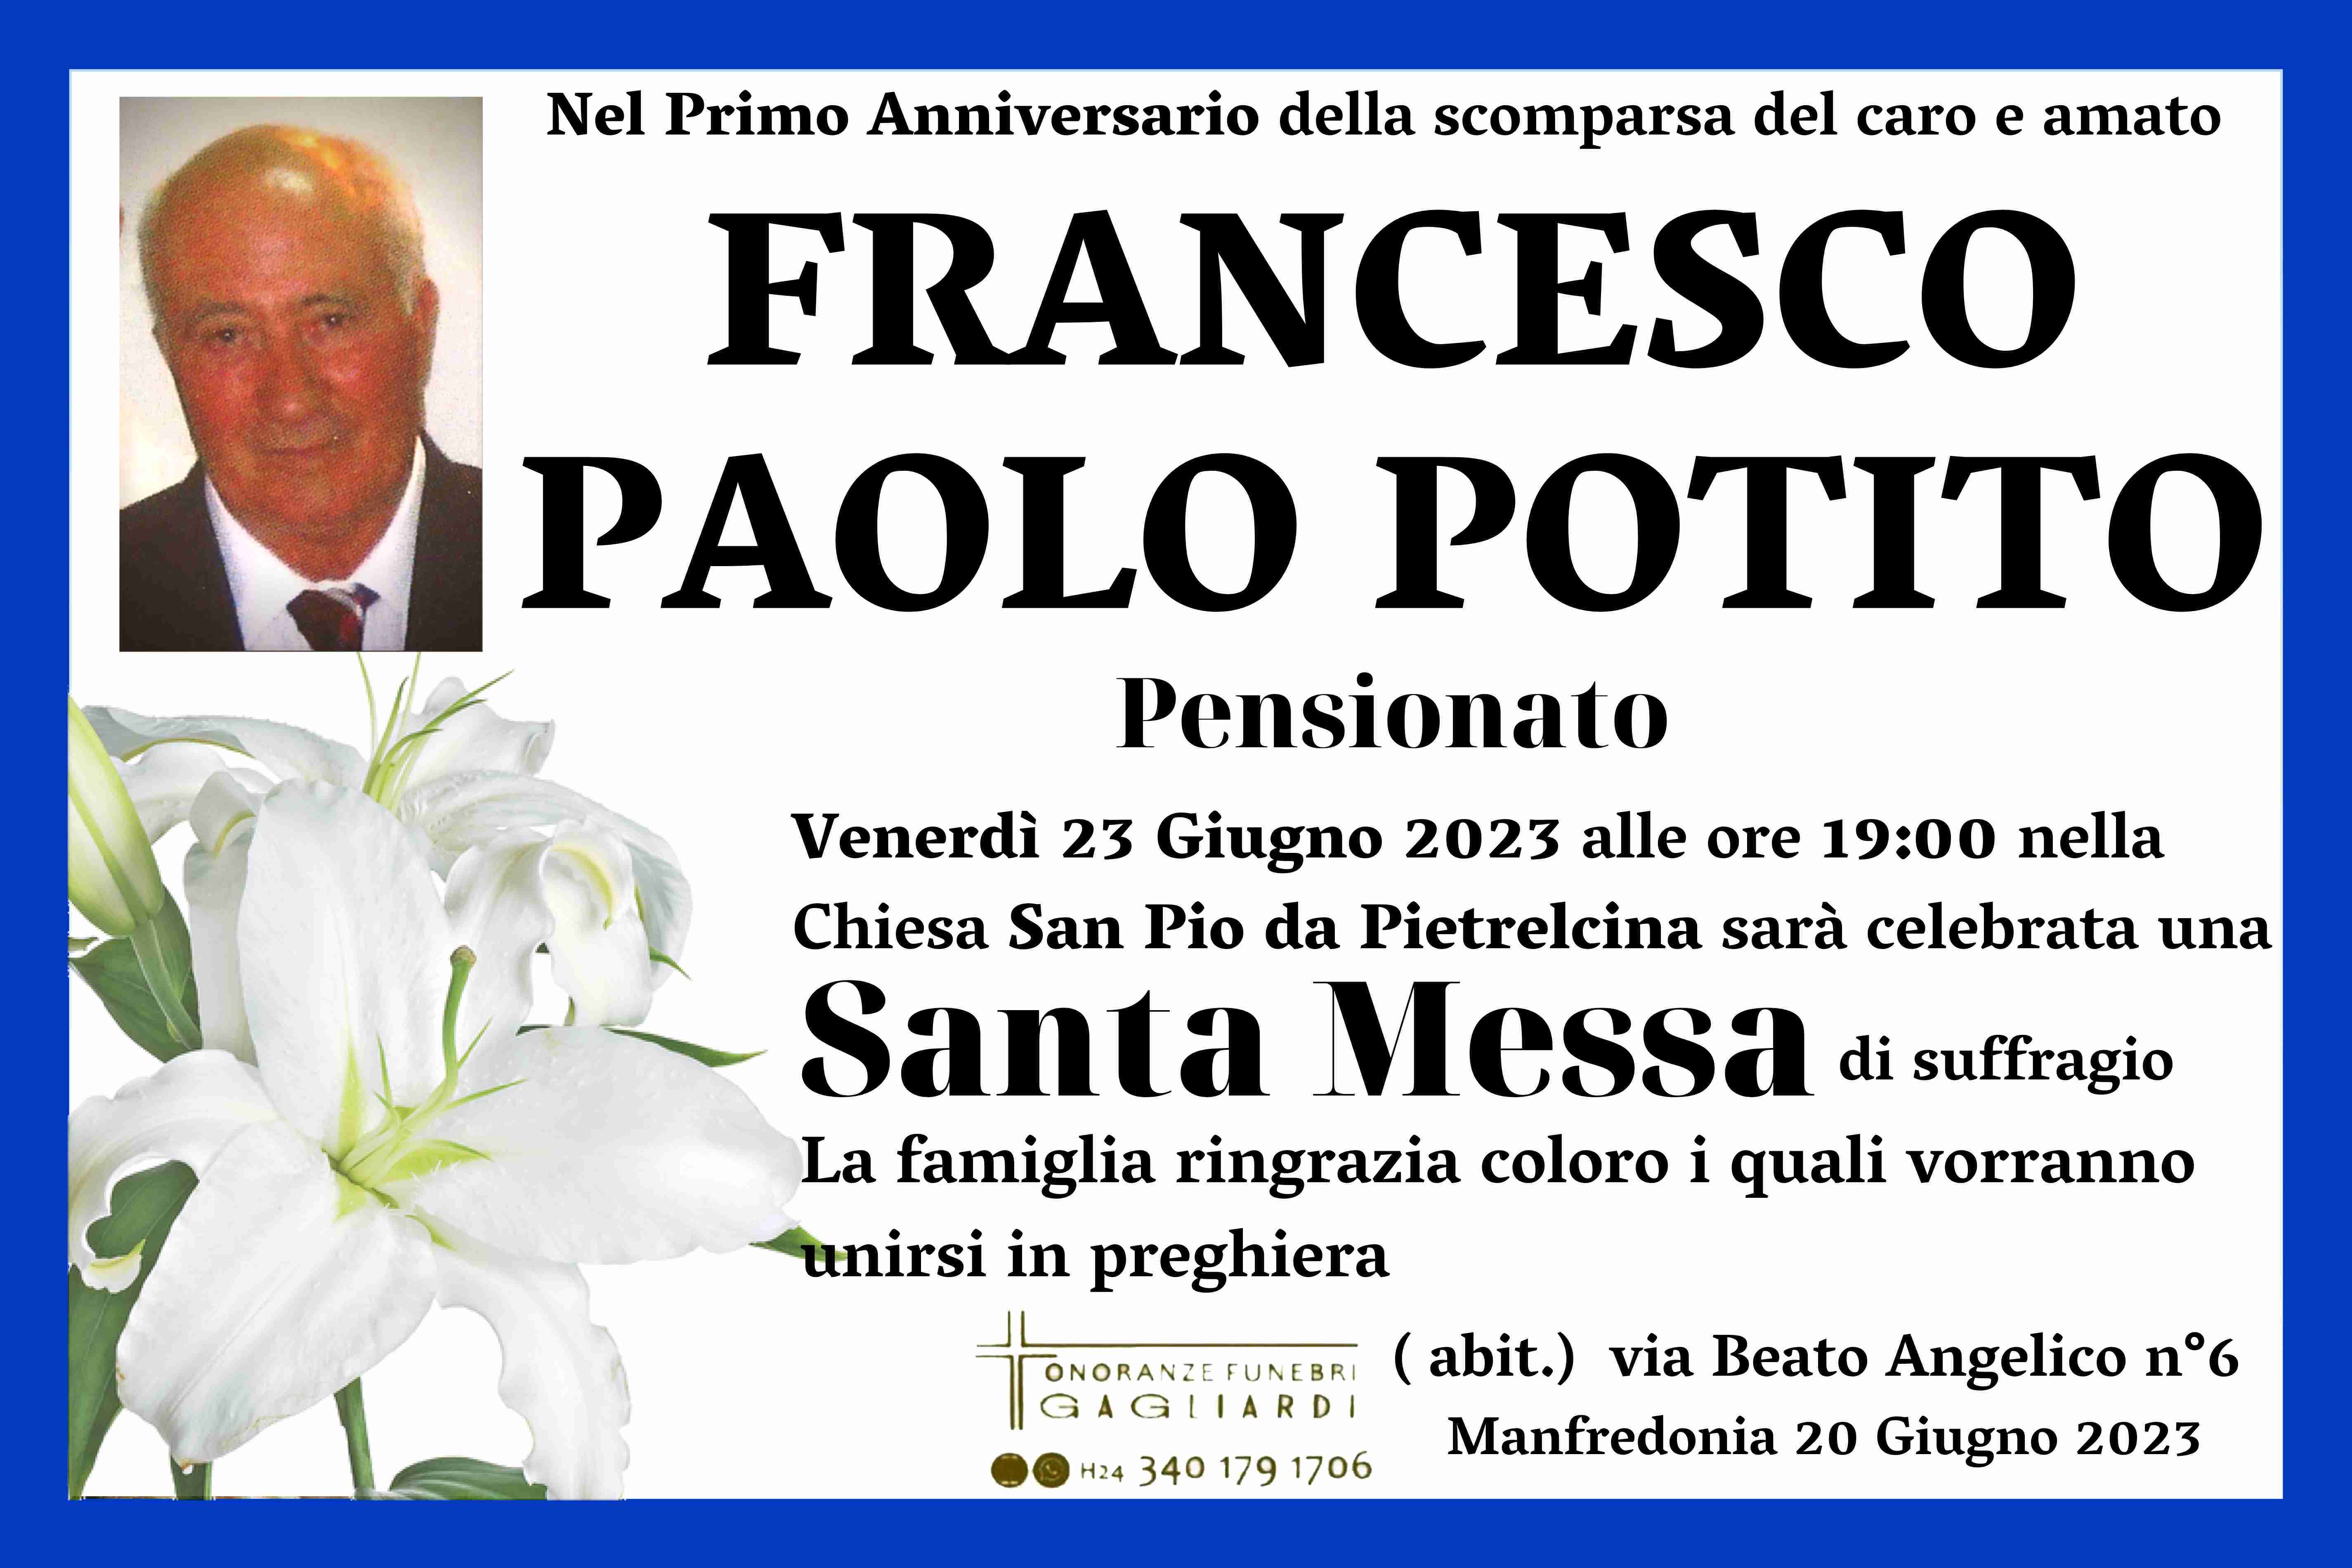 Francesco Paolo Potito